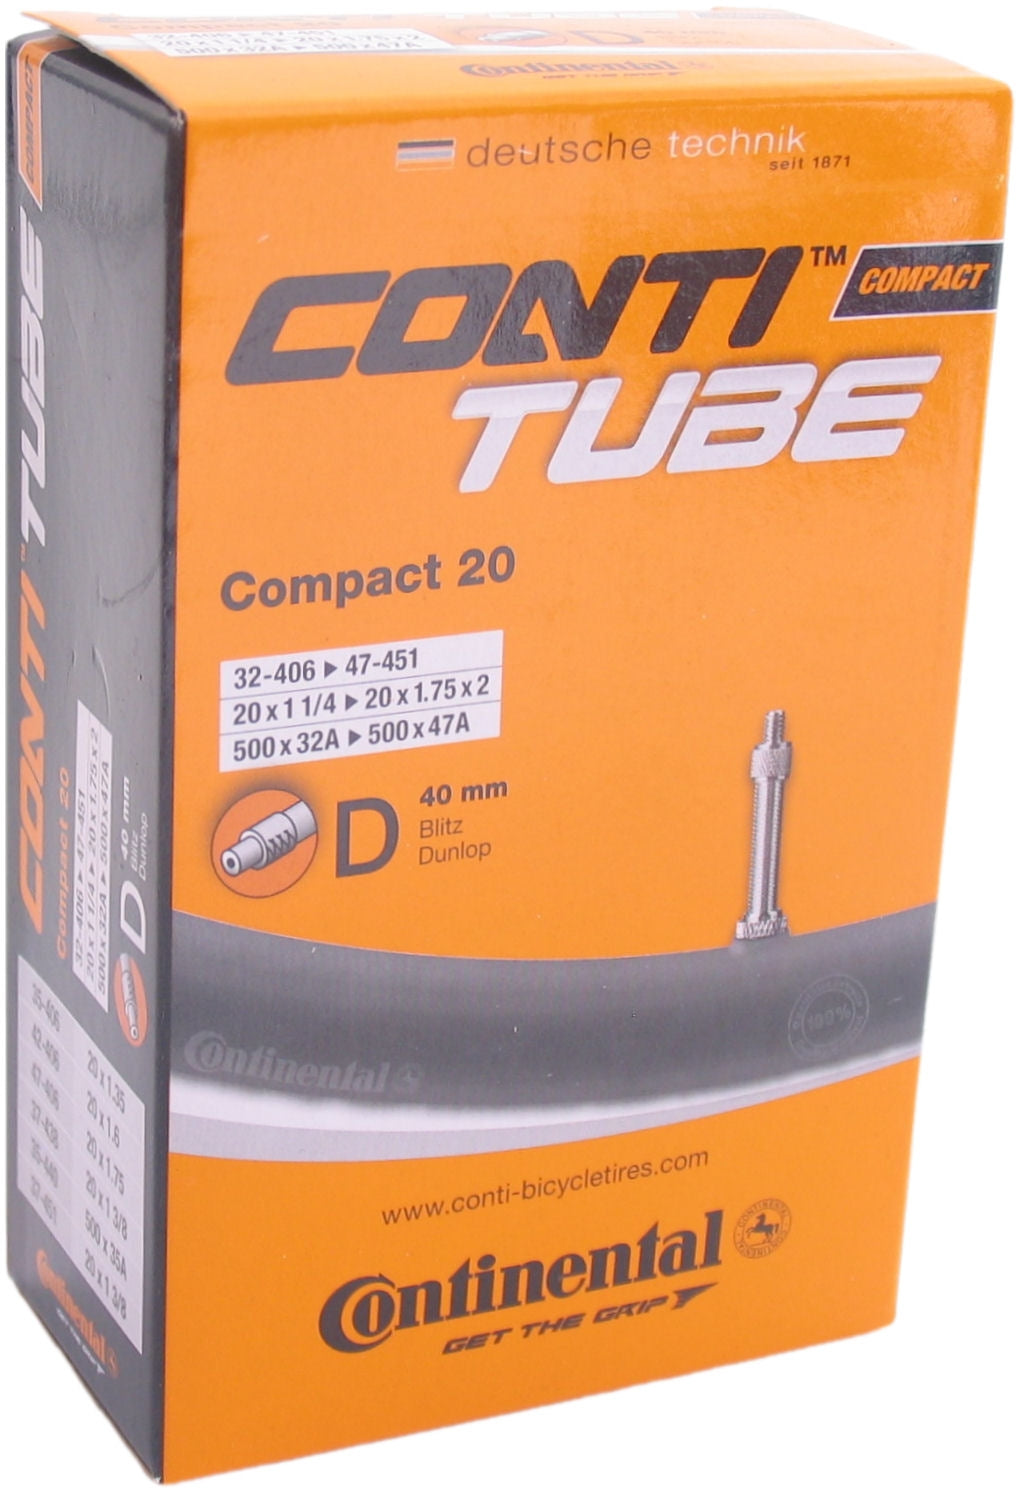 Tubo interno continental DV7 Compacto de 20 pulgadas 32 47406-451 DV 40 mm